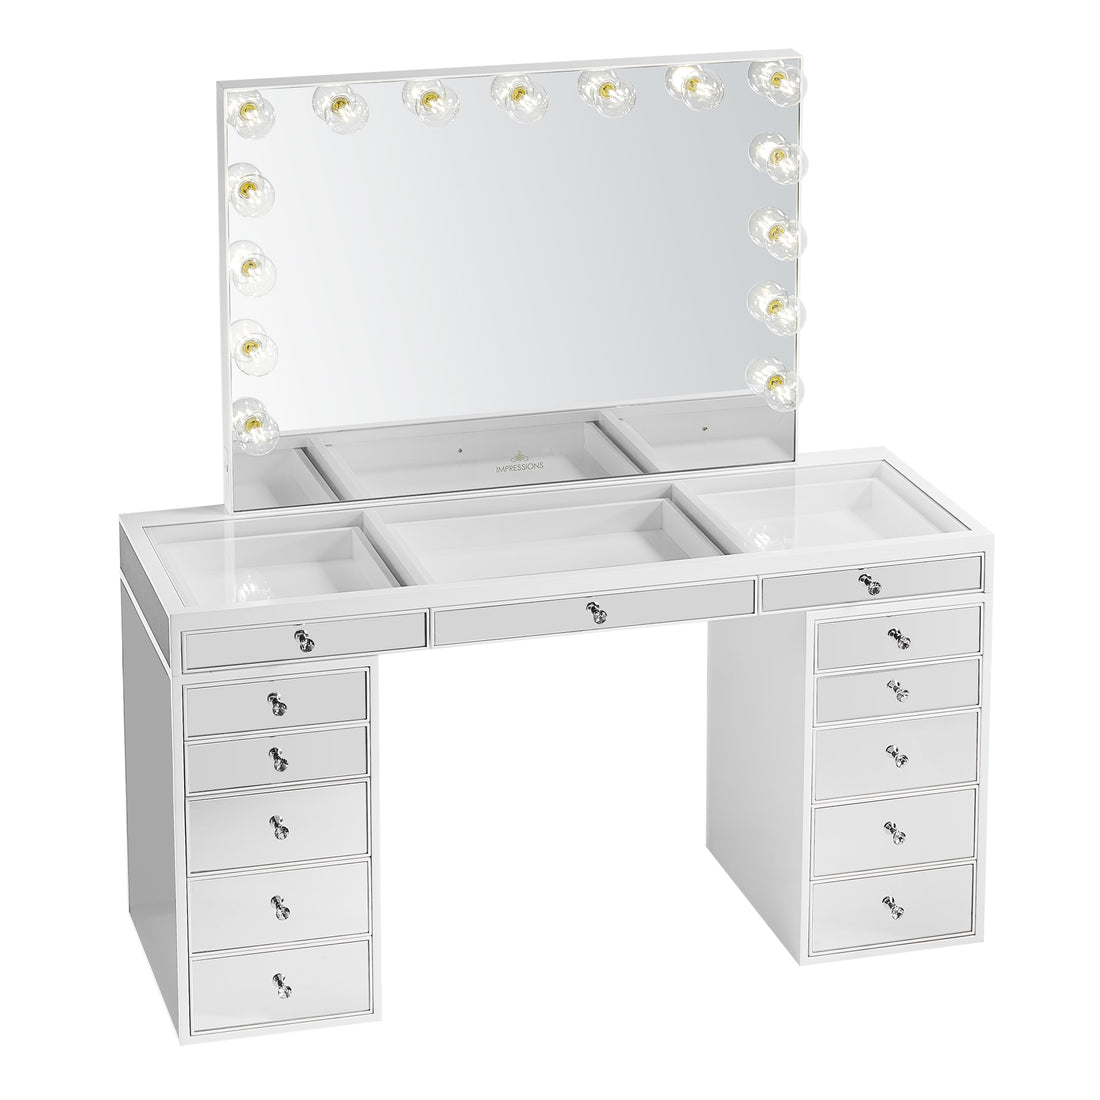 SlayStation Pro Premium Mirrored Vanity Table, White